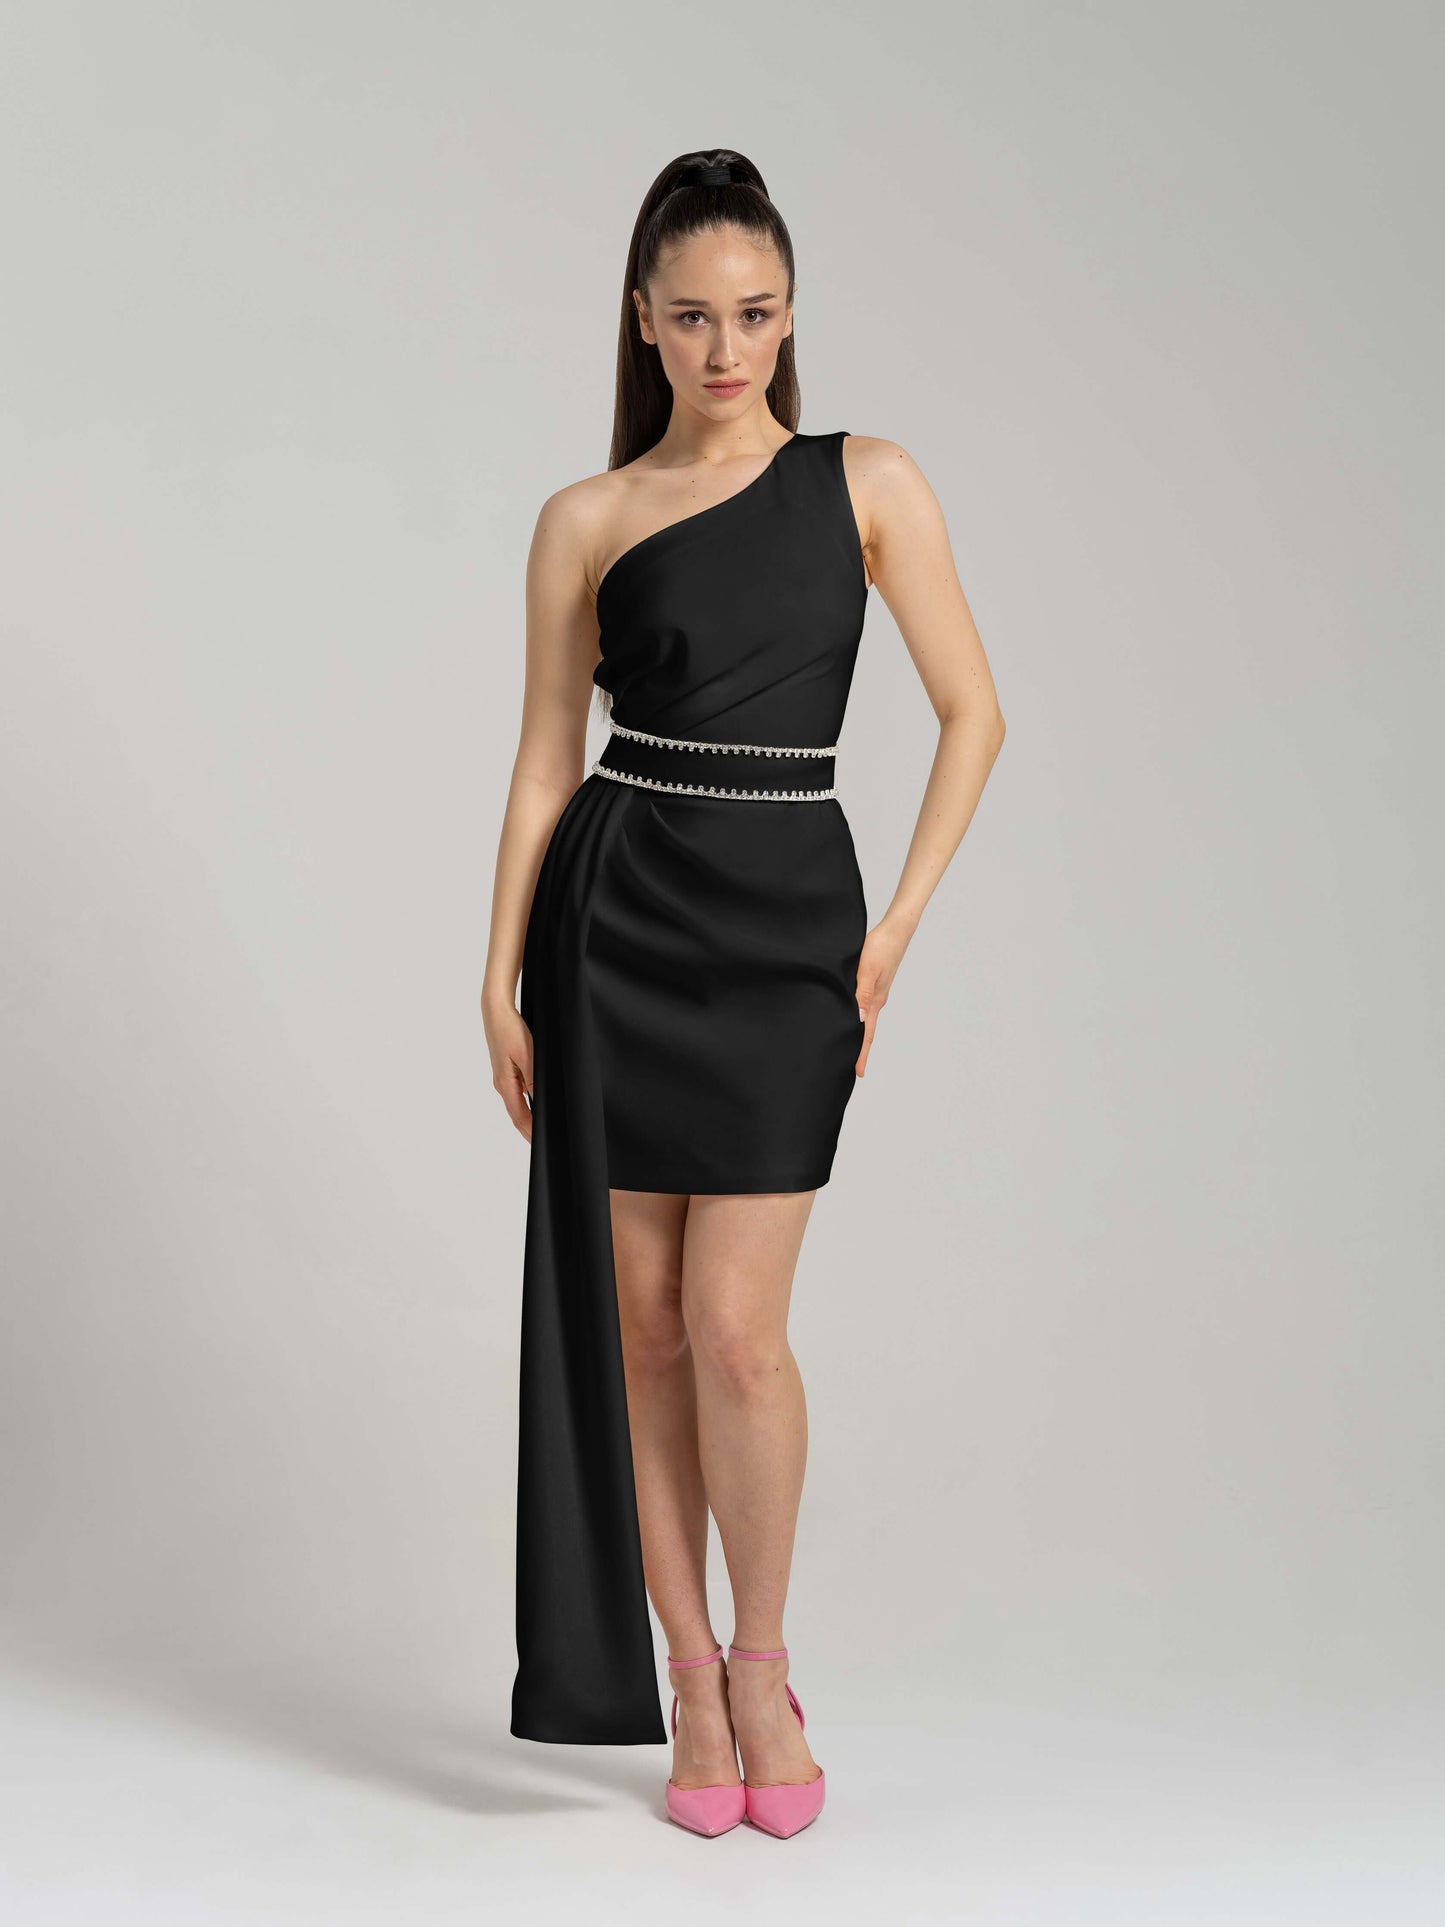 Iconic Glamour Crystal-Adorned Dress - Black by Tia Dorraine Women's Luxury Fashion Designer Clothing Brand